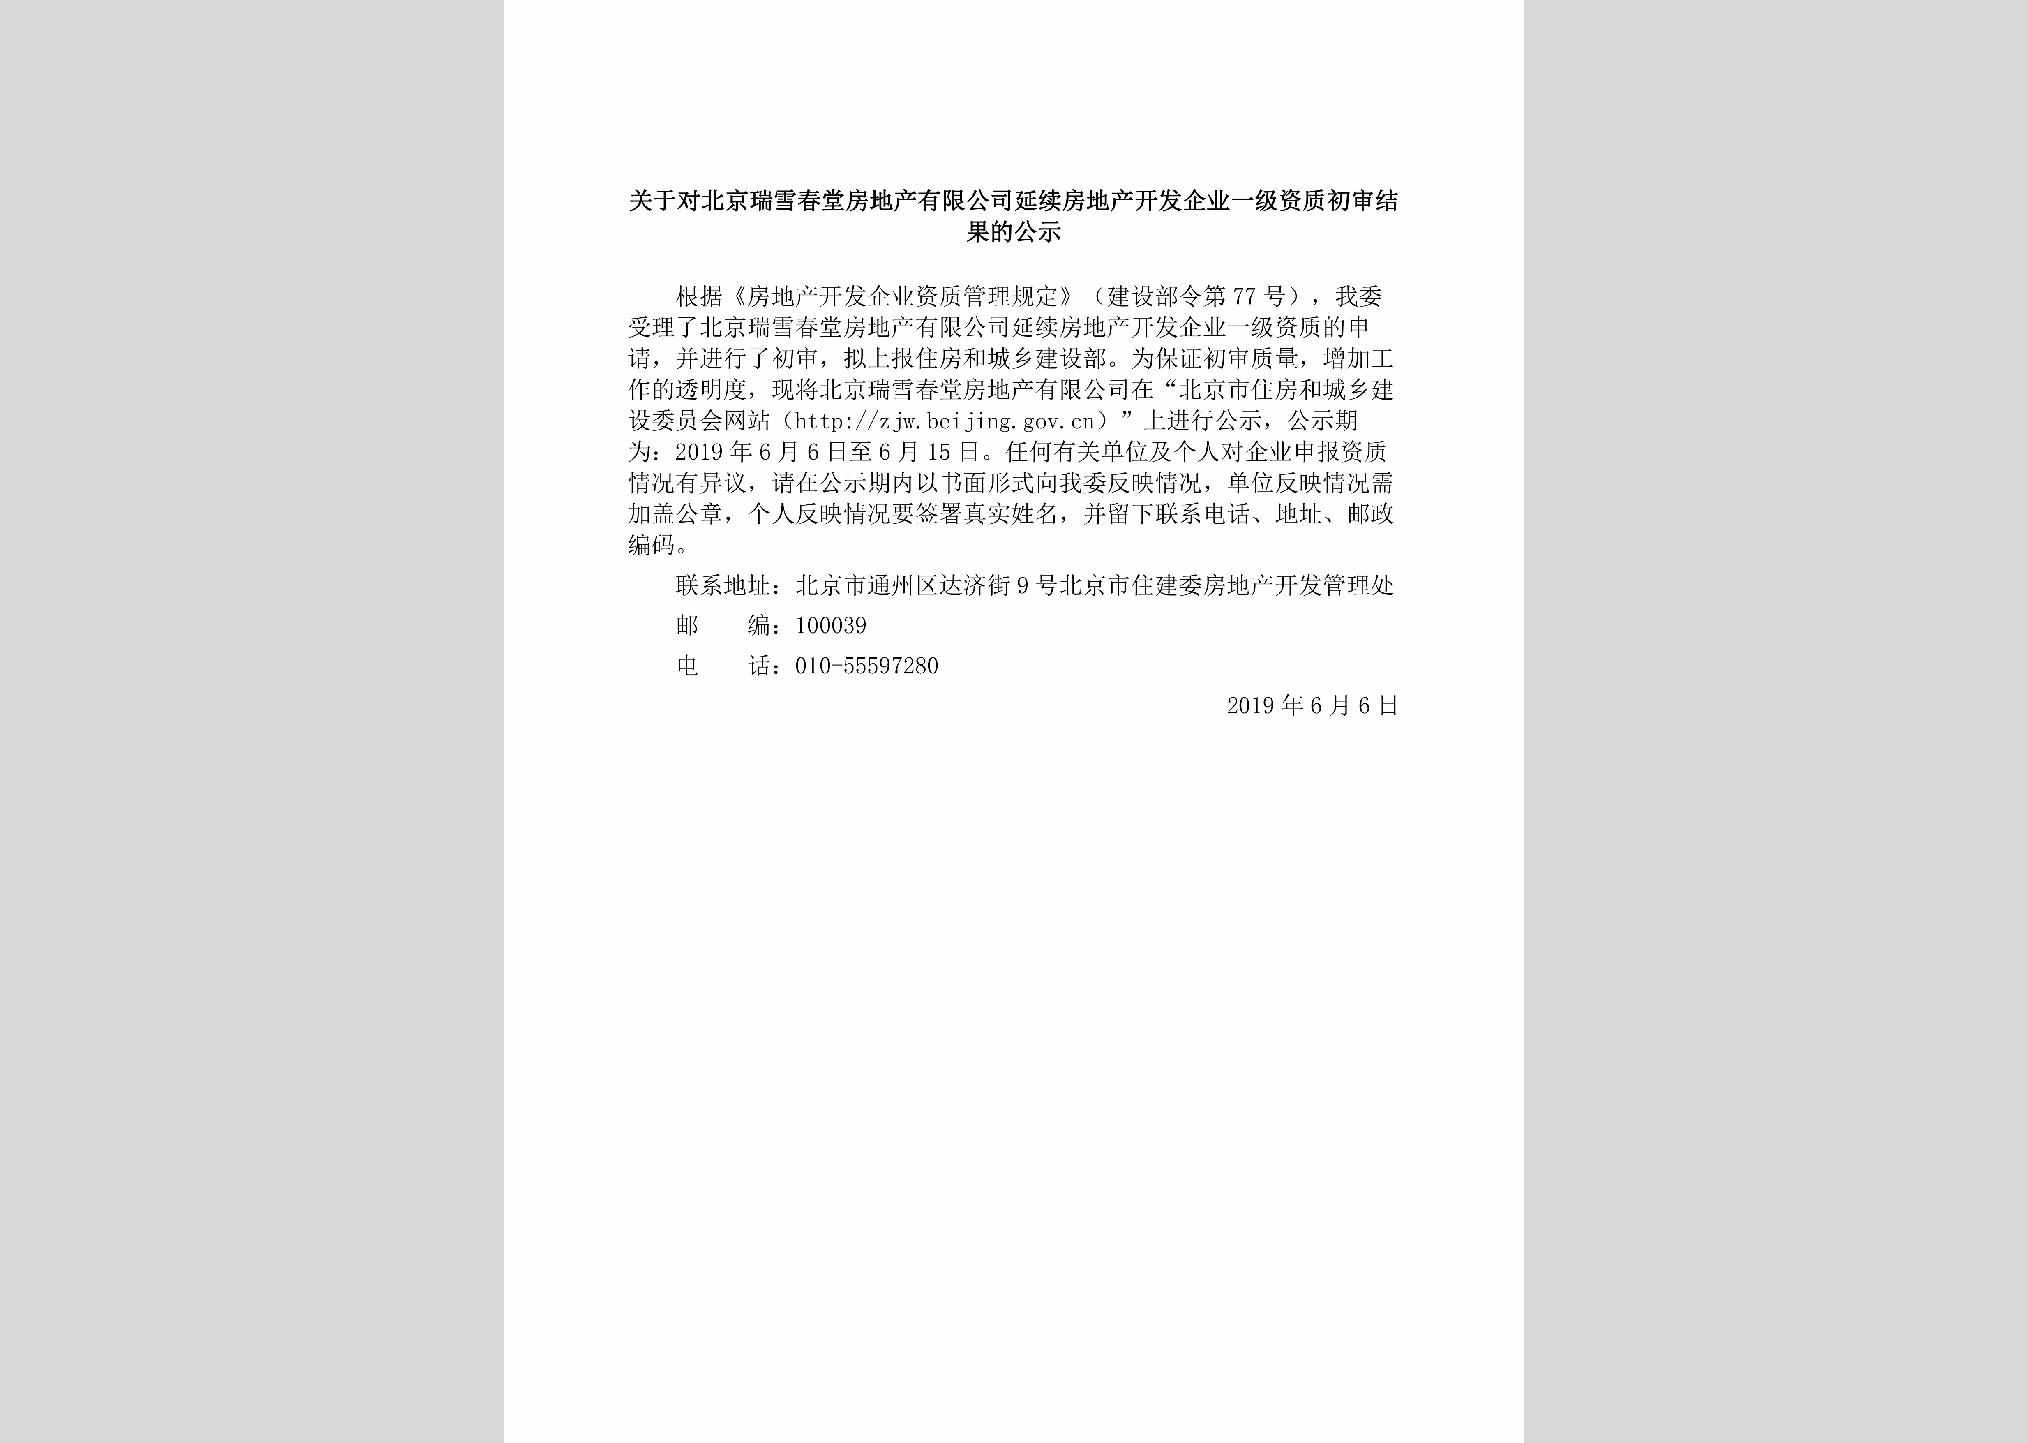 BJ-BJRXCTFD-2019：关于对北京瑞雪春堂房地产有限公司延续房地产开发企业一级资质初审结果的公示